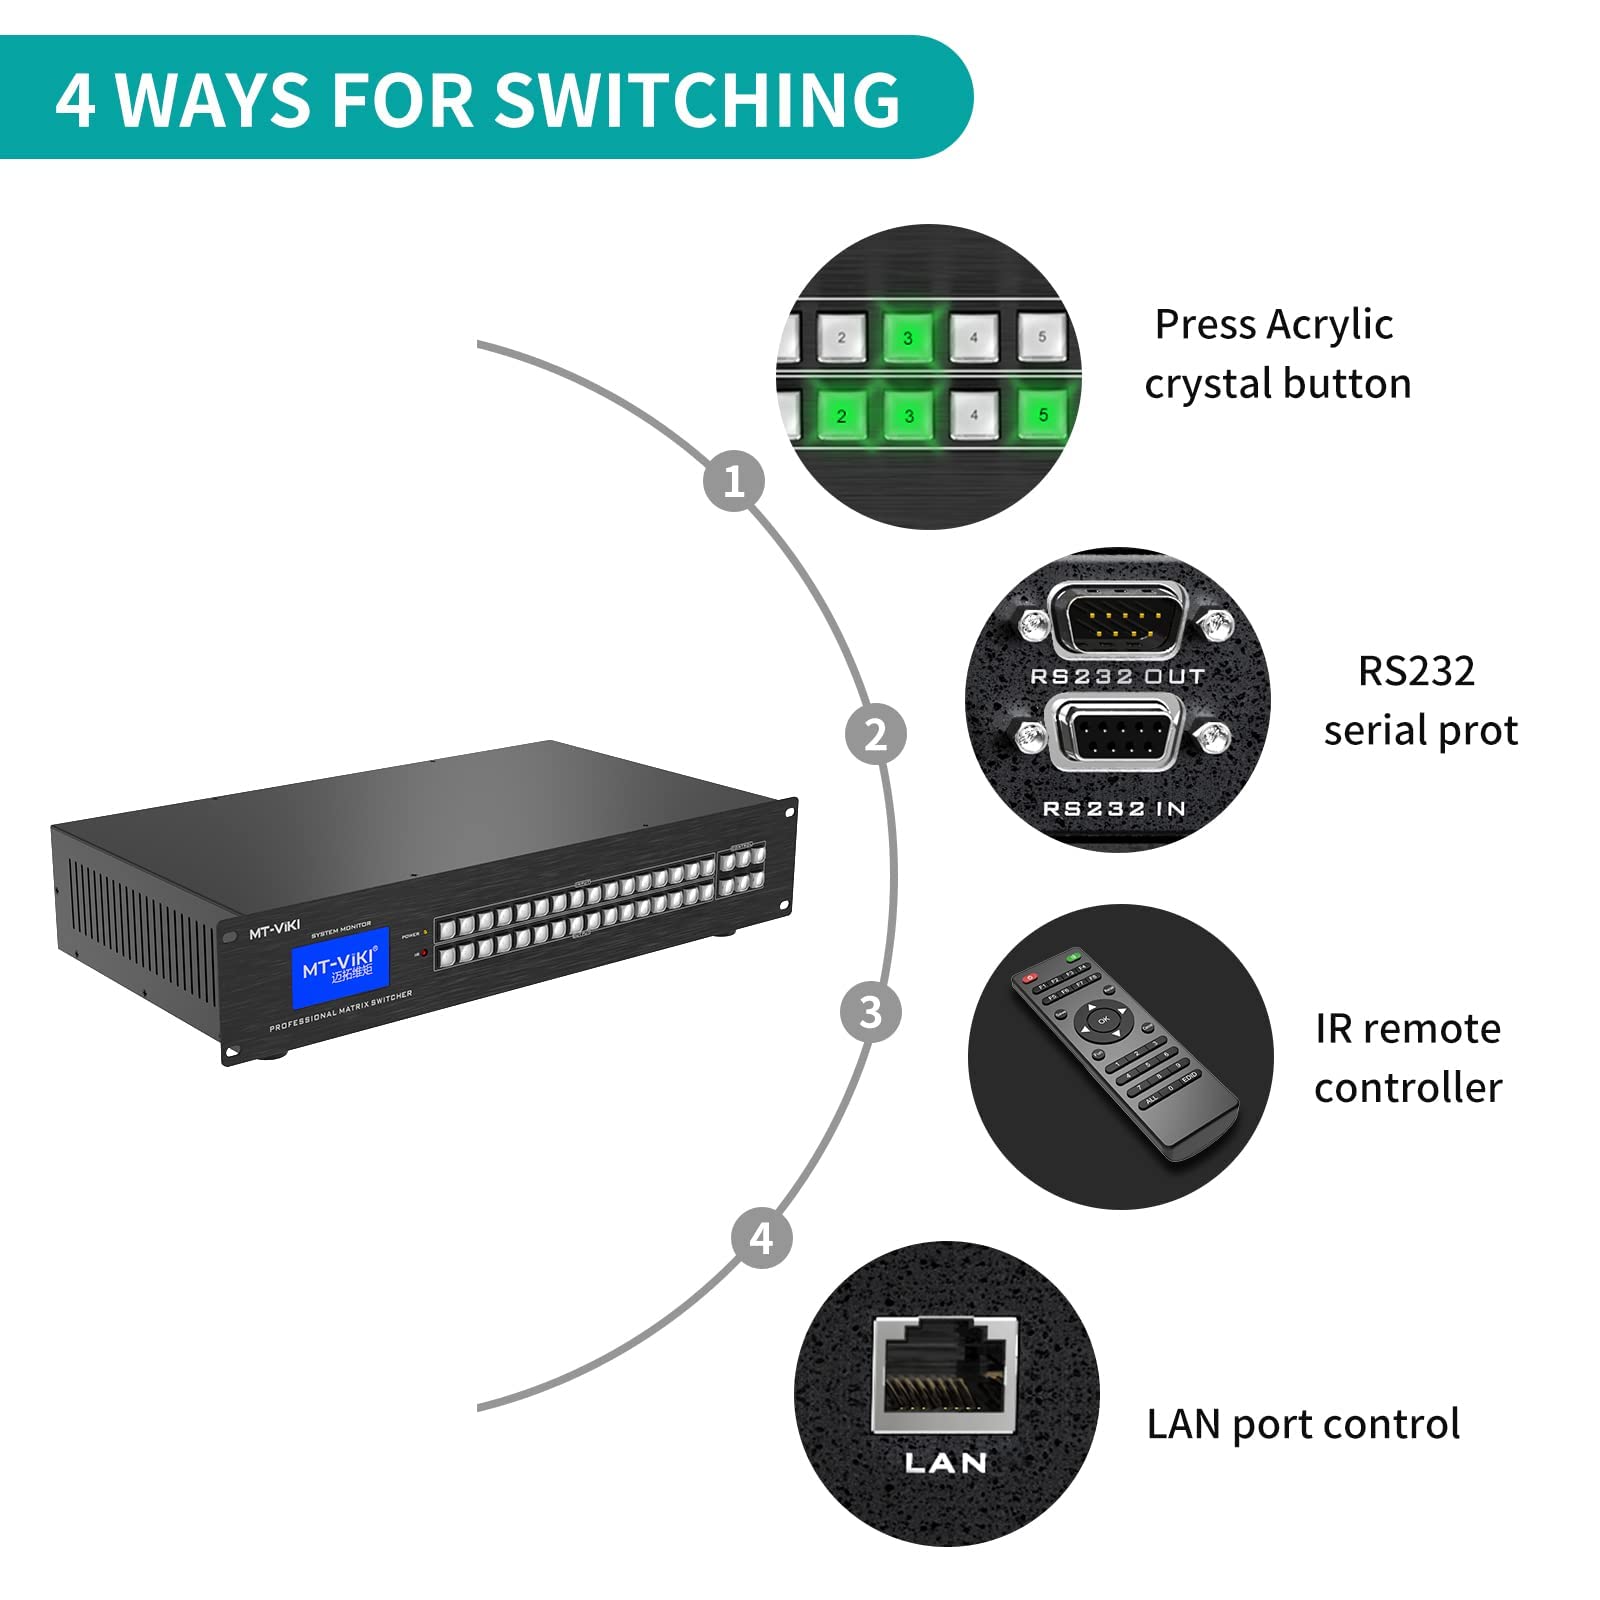 MT-VIKI 16x16 HDMI Matrix Switch 4K@30Hz, Rack Mount Switcher & Splitter 16 in 16 Out, Backlit RS232 LAN Port and EDID